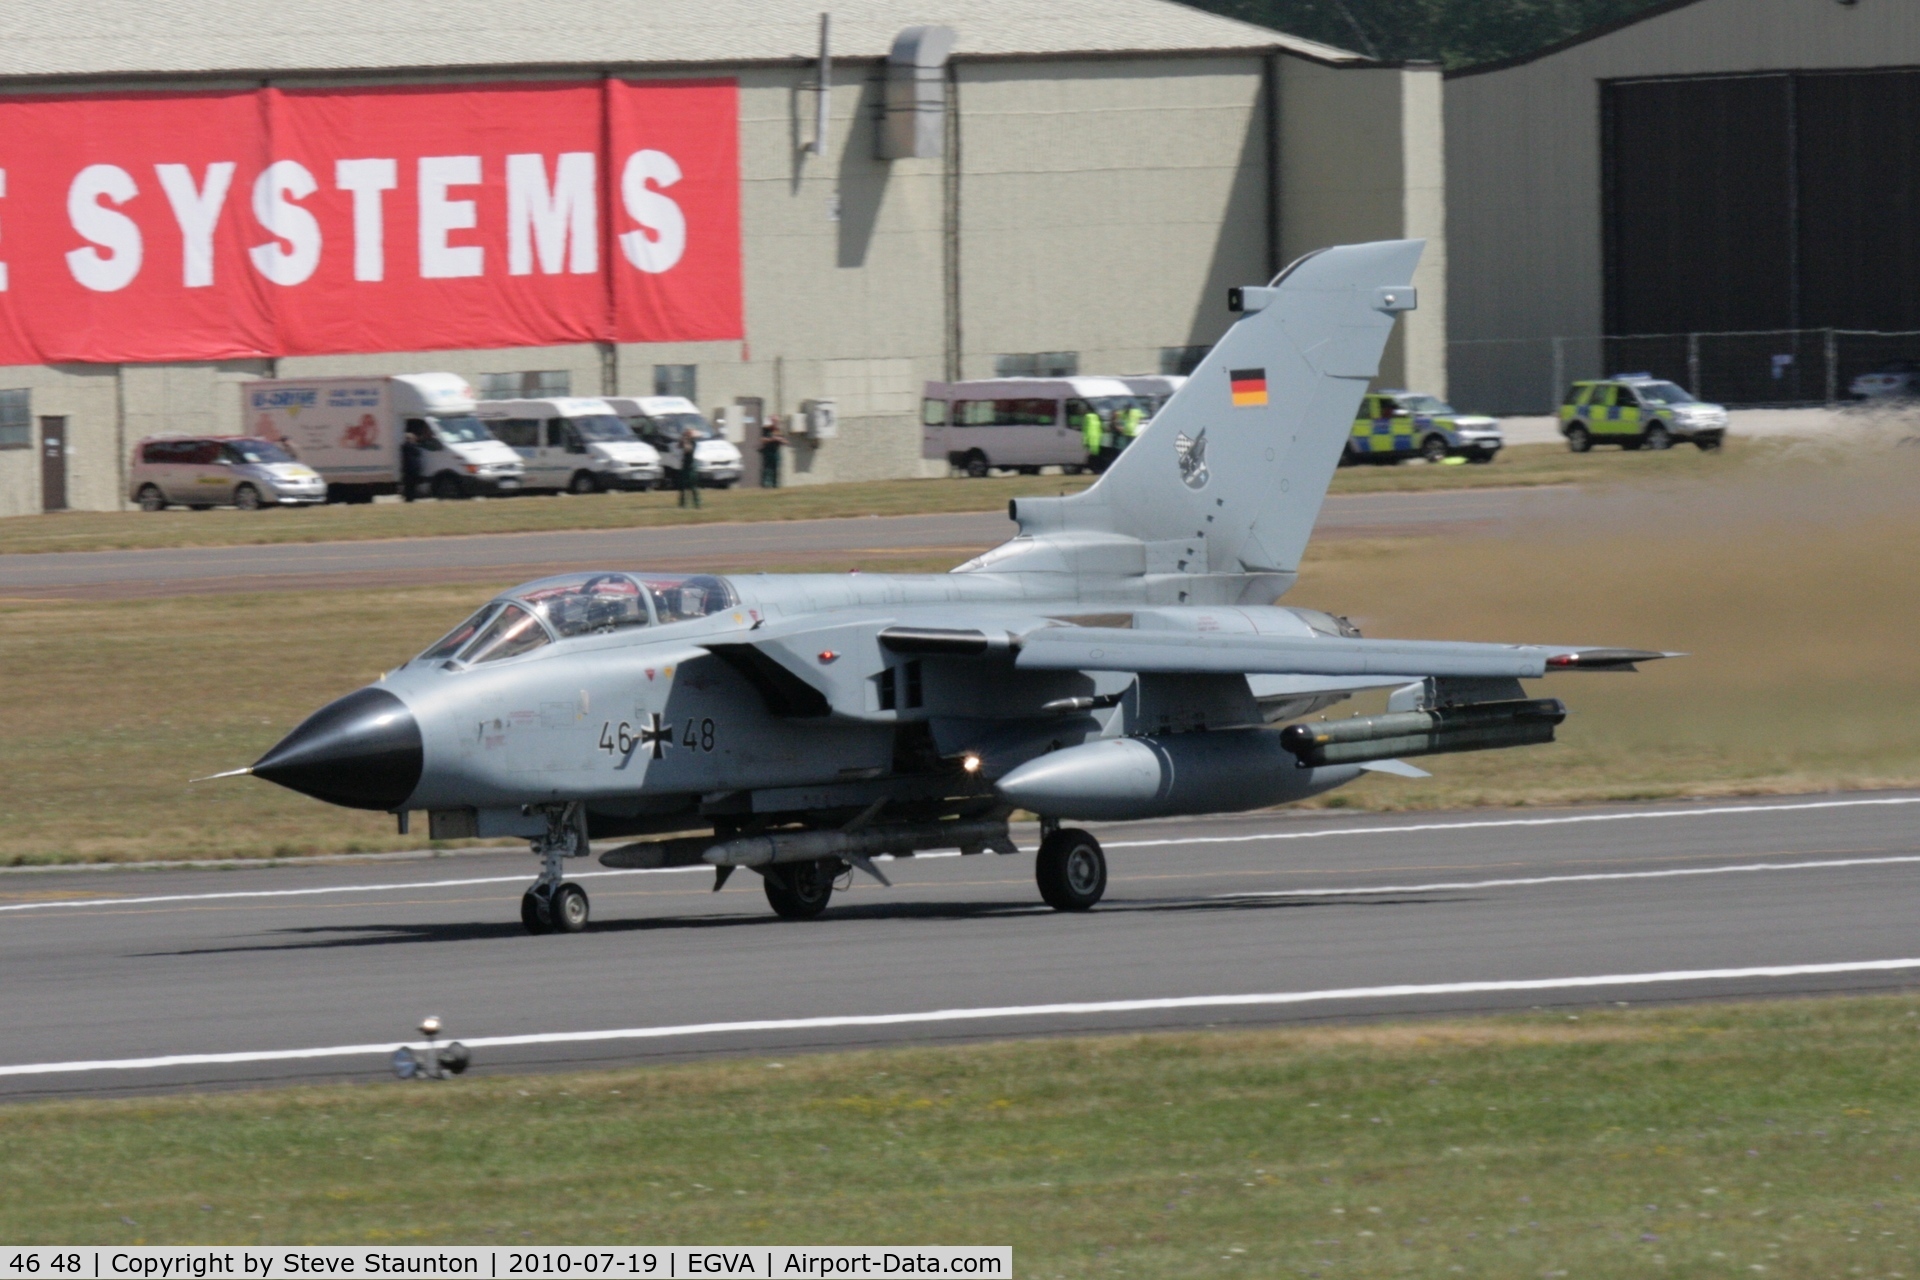 46 48, Panavia Tornado ECR C/N 881/GS281/4348, Taken at the Royal International Air Tattoo 2010